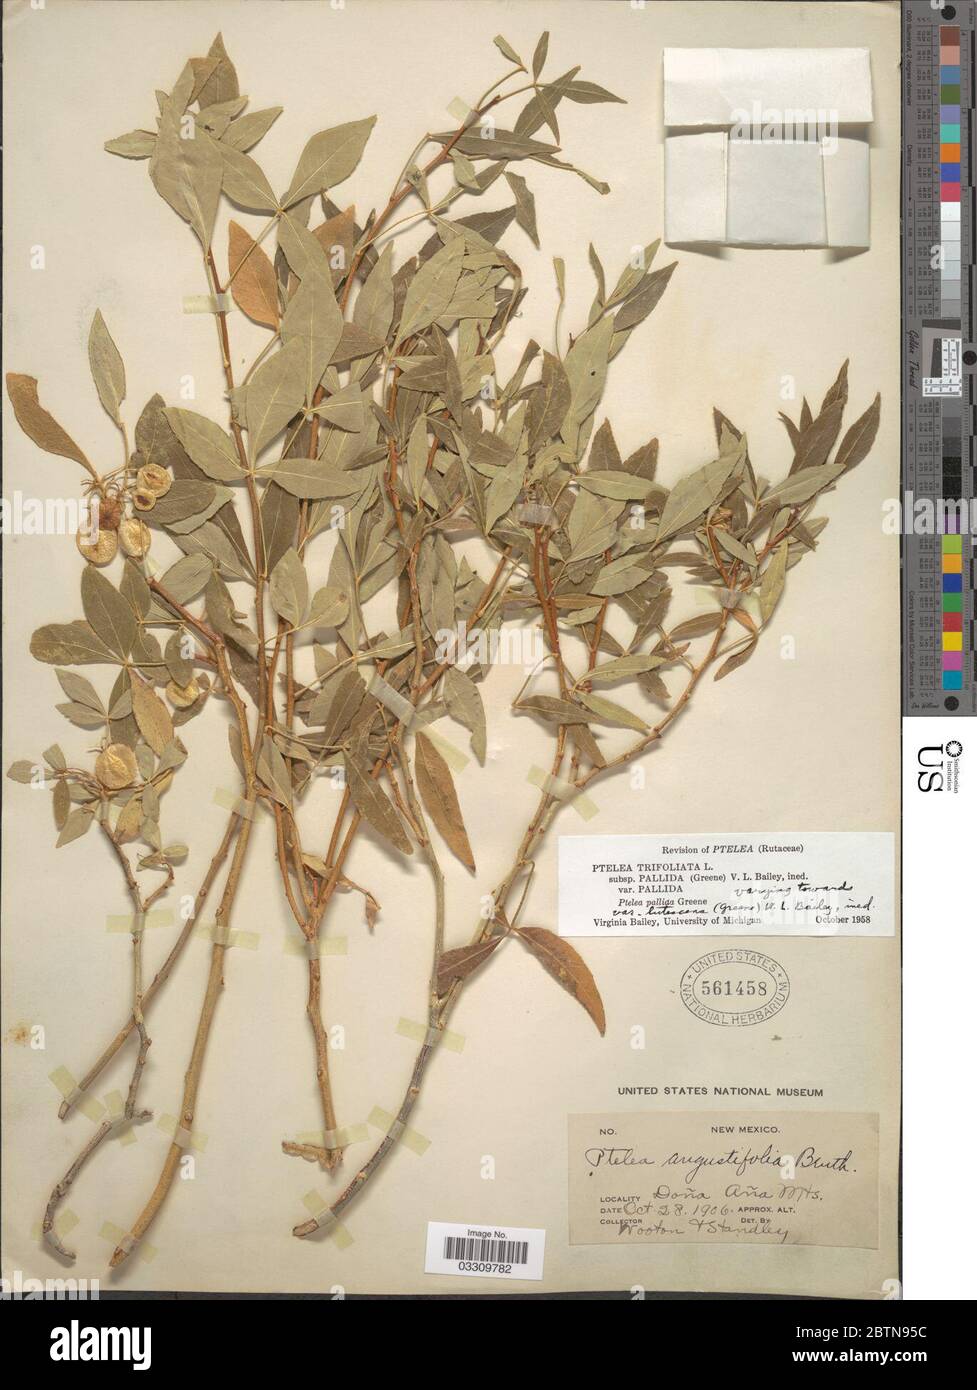 Ptelea trifoliata subsp pallida Greene V L Bailey. 12 Jun 20191 Stock Photo